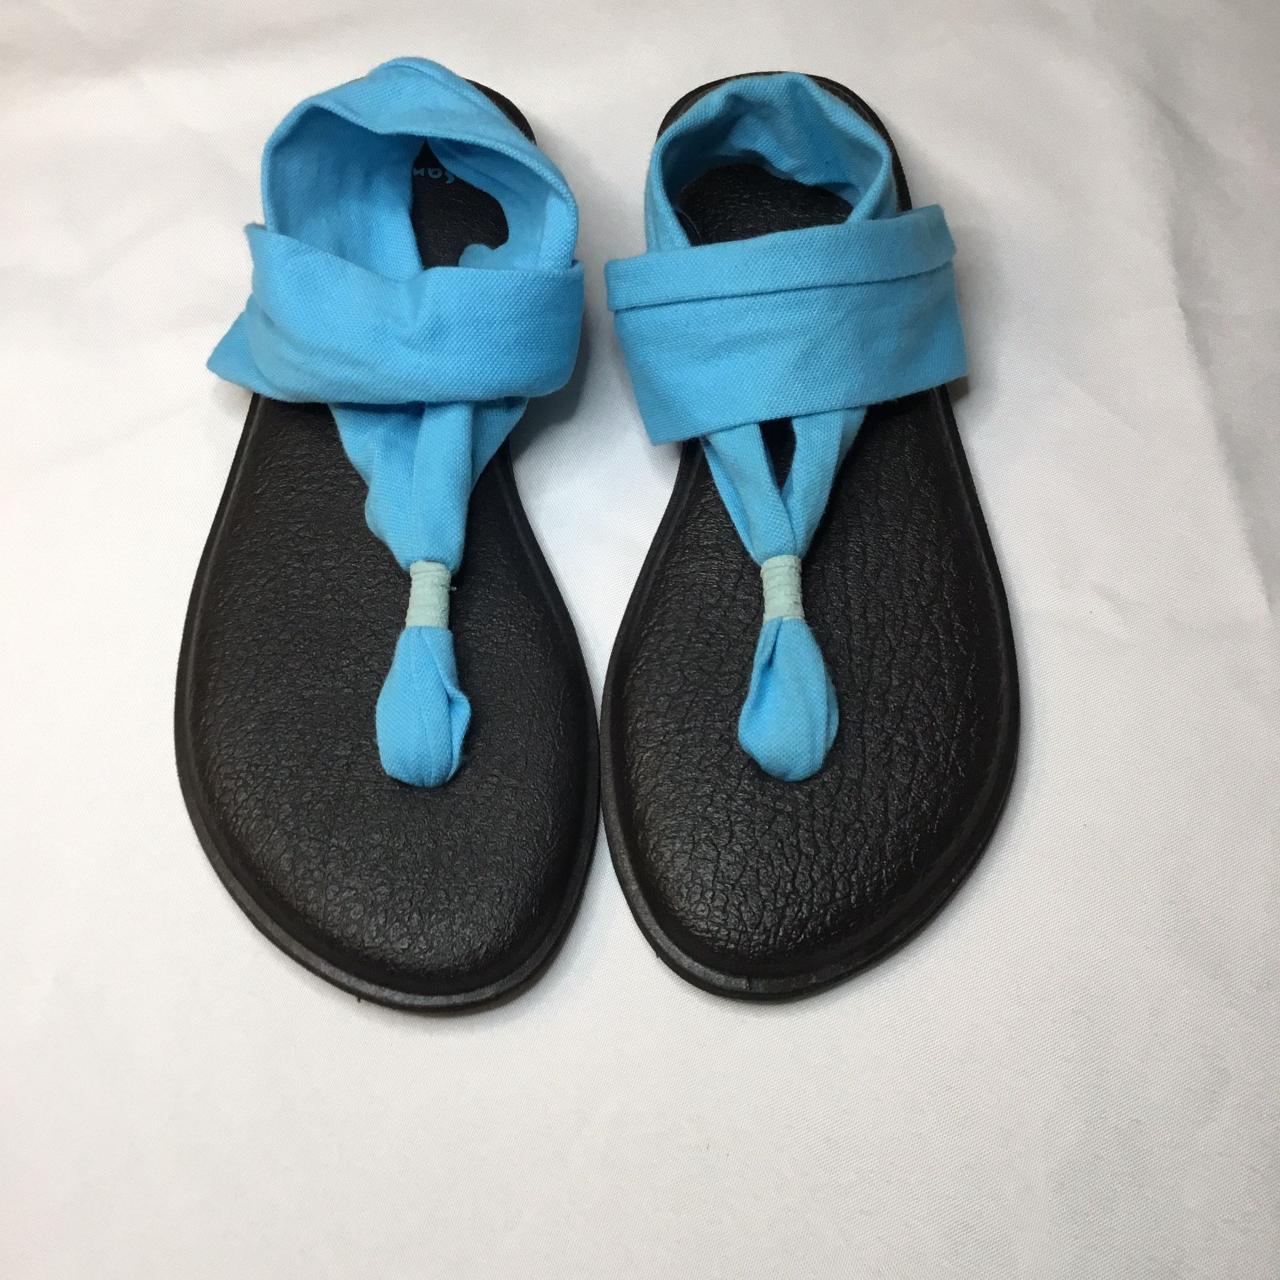 Sanuk Women's Yoga Sling2 Blue/Teal Yoga Mat Sandal Flip-Flop Size